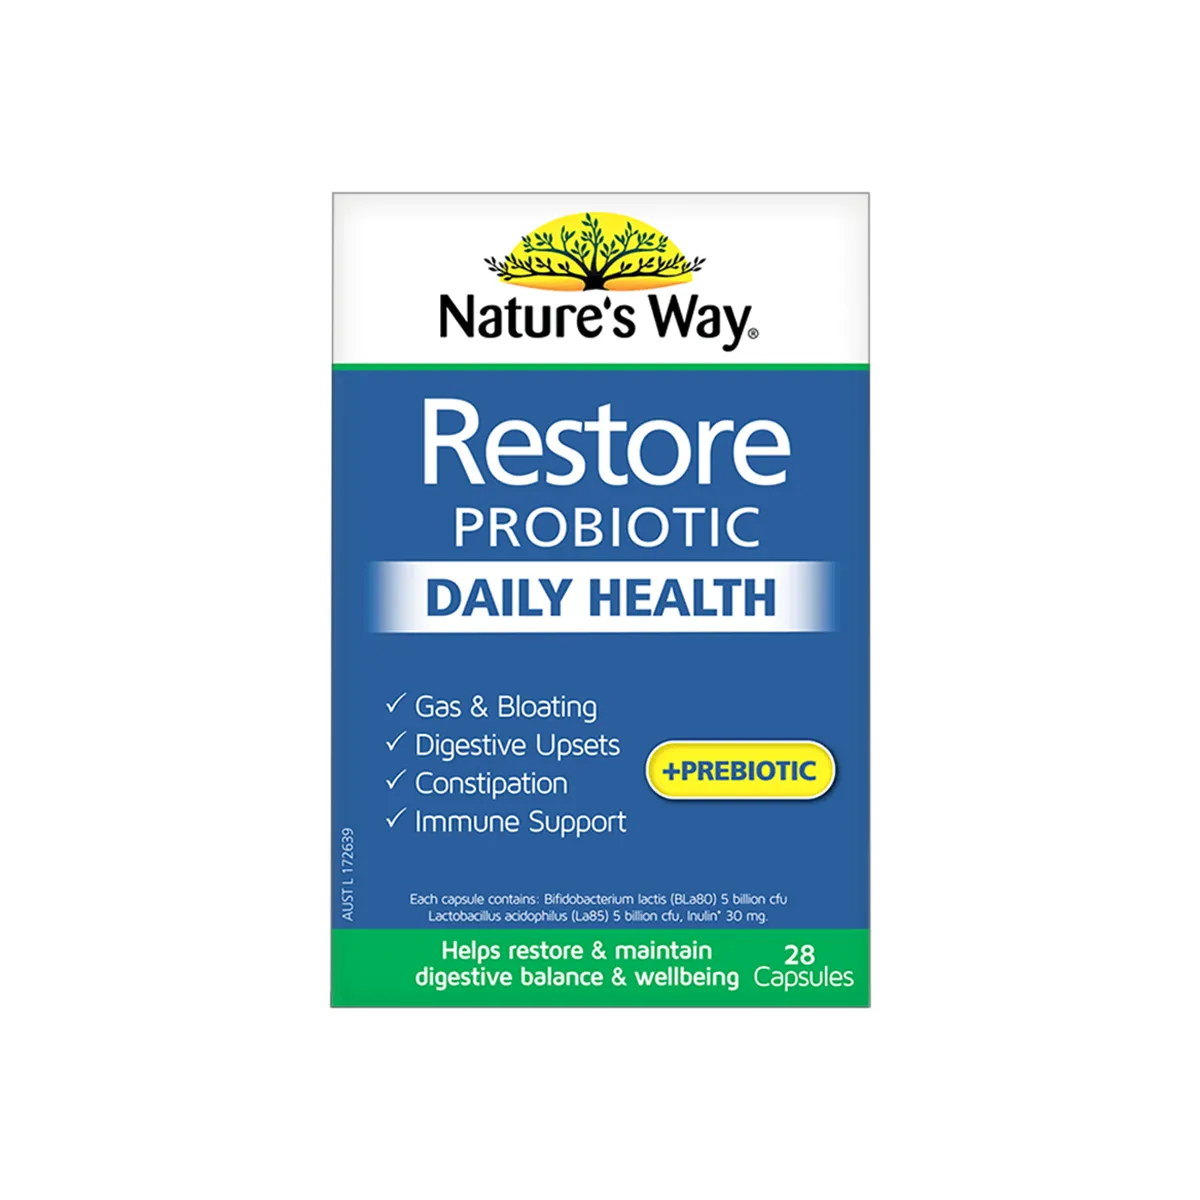 Nature’s Way Restore Probiotic Daily Capsules 28s